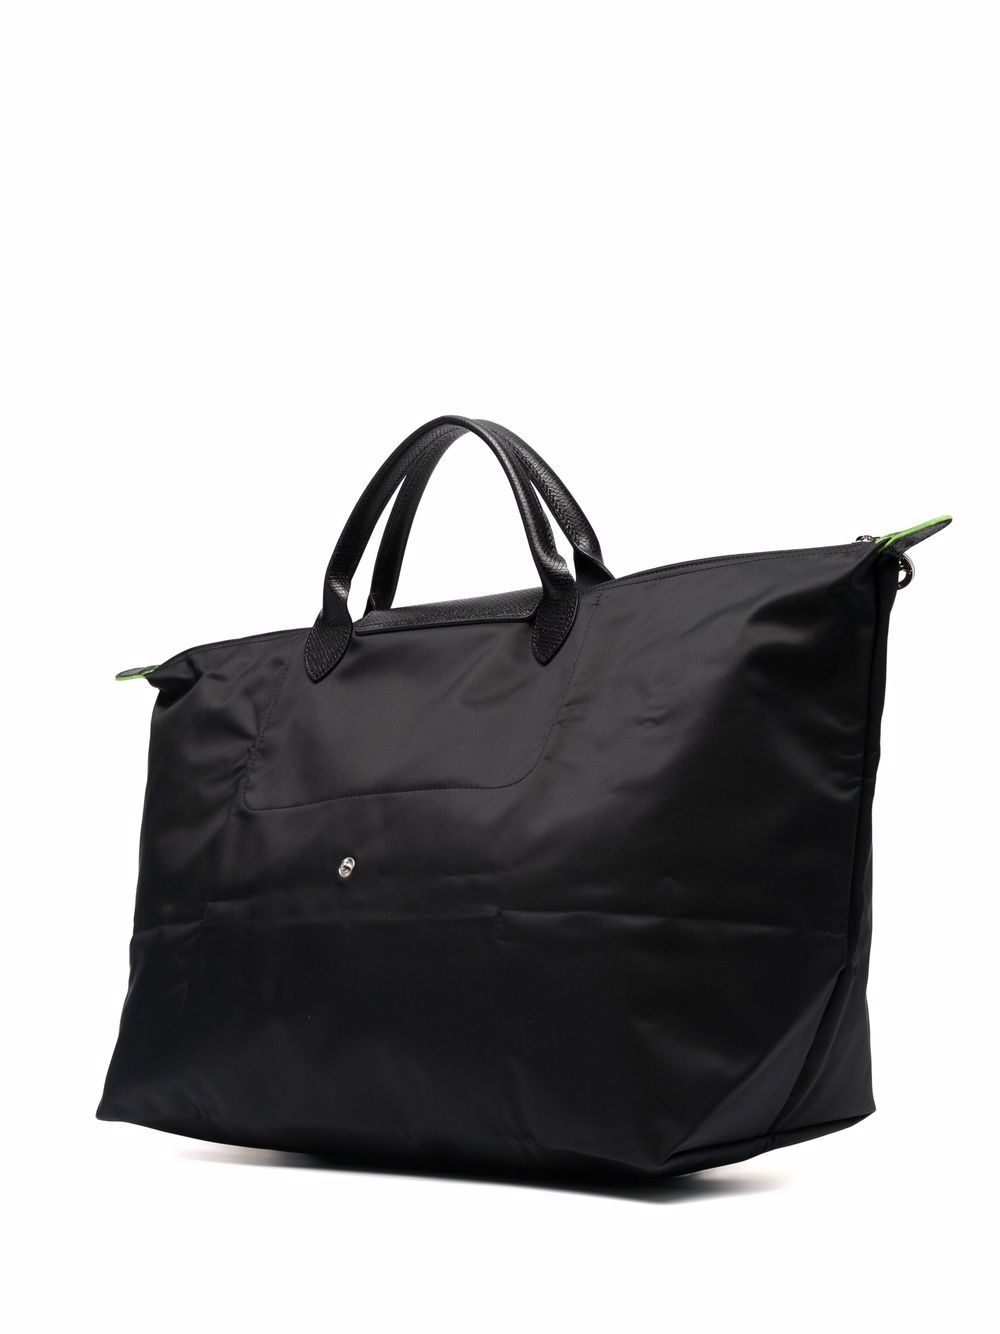 Longchamp Le Pliage Large Travel Bag, Black, 17.75  